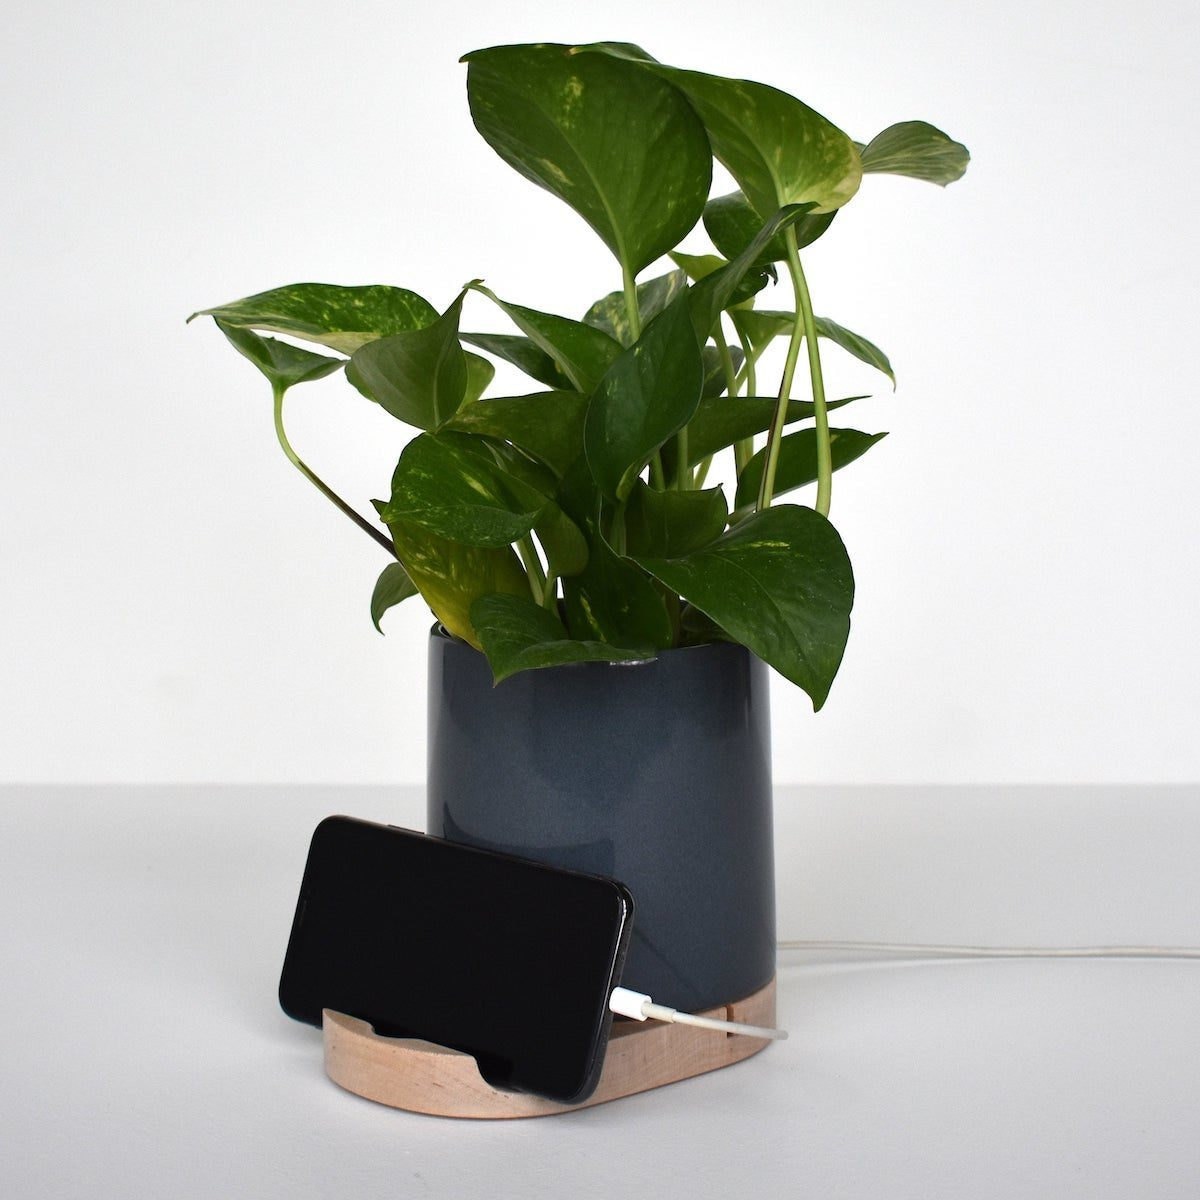 Phone dock planter from STAK Ceramics